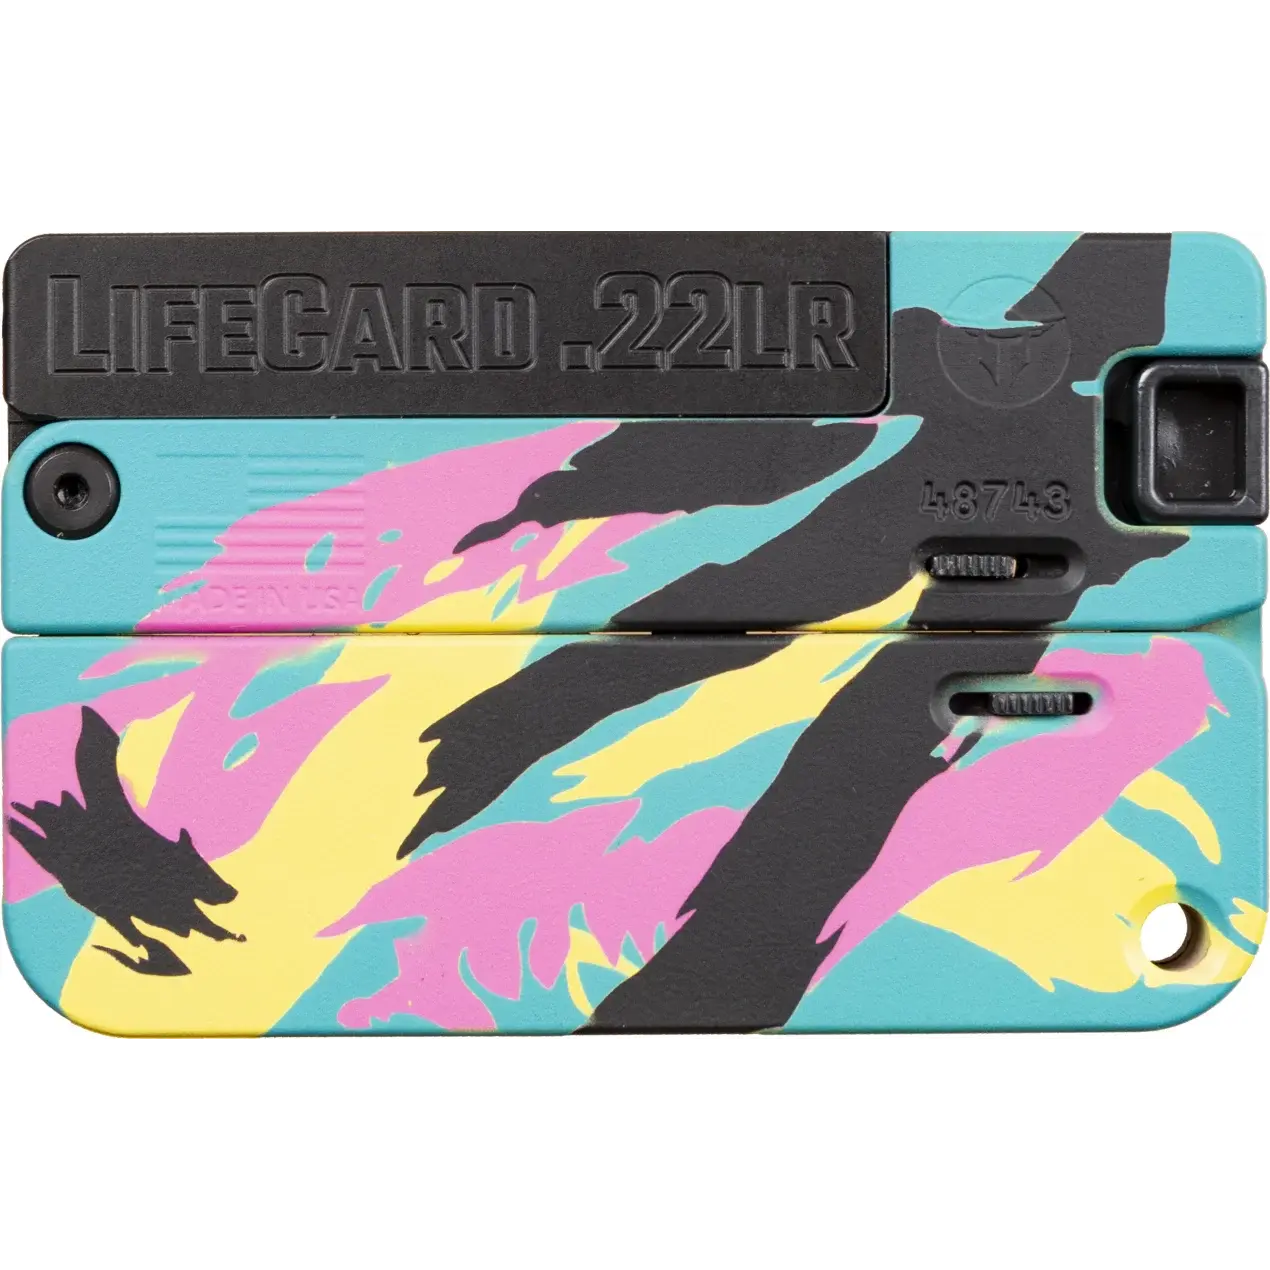 Trailblazer Lifecard 22 LR 2.5'' Pistol_Miami Vice Theme Colors